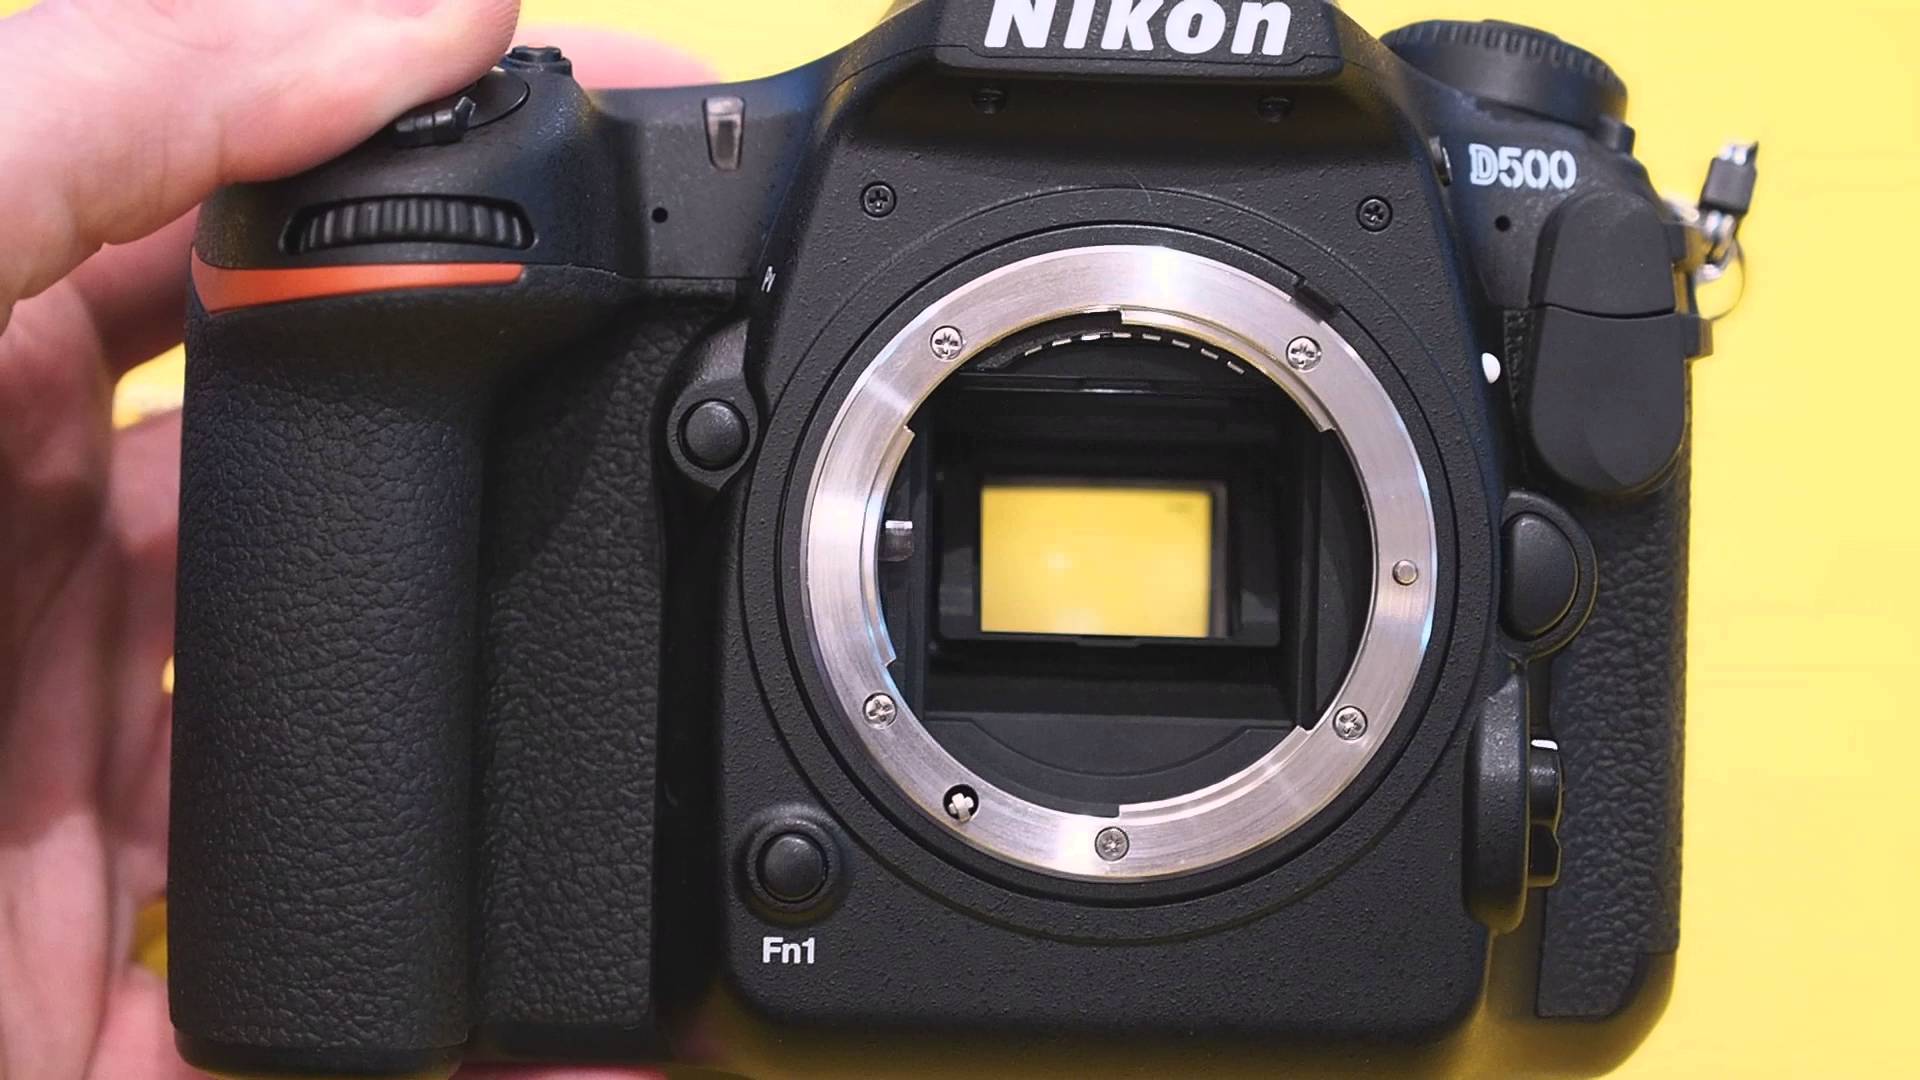 Nikon D500 Body now In Stock at Best Buy !